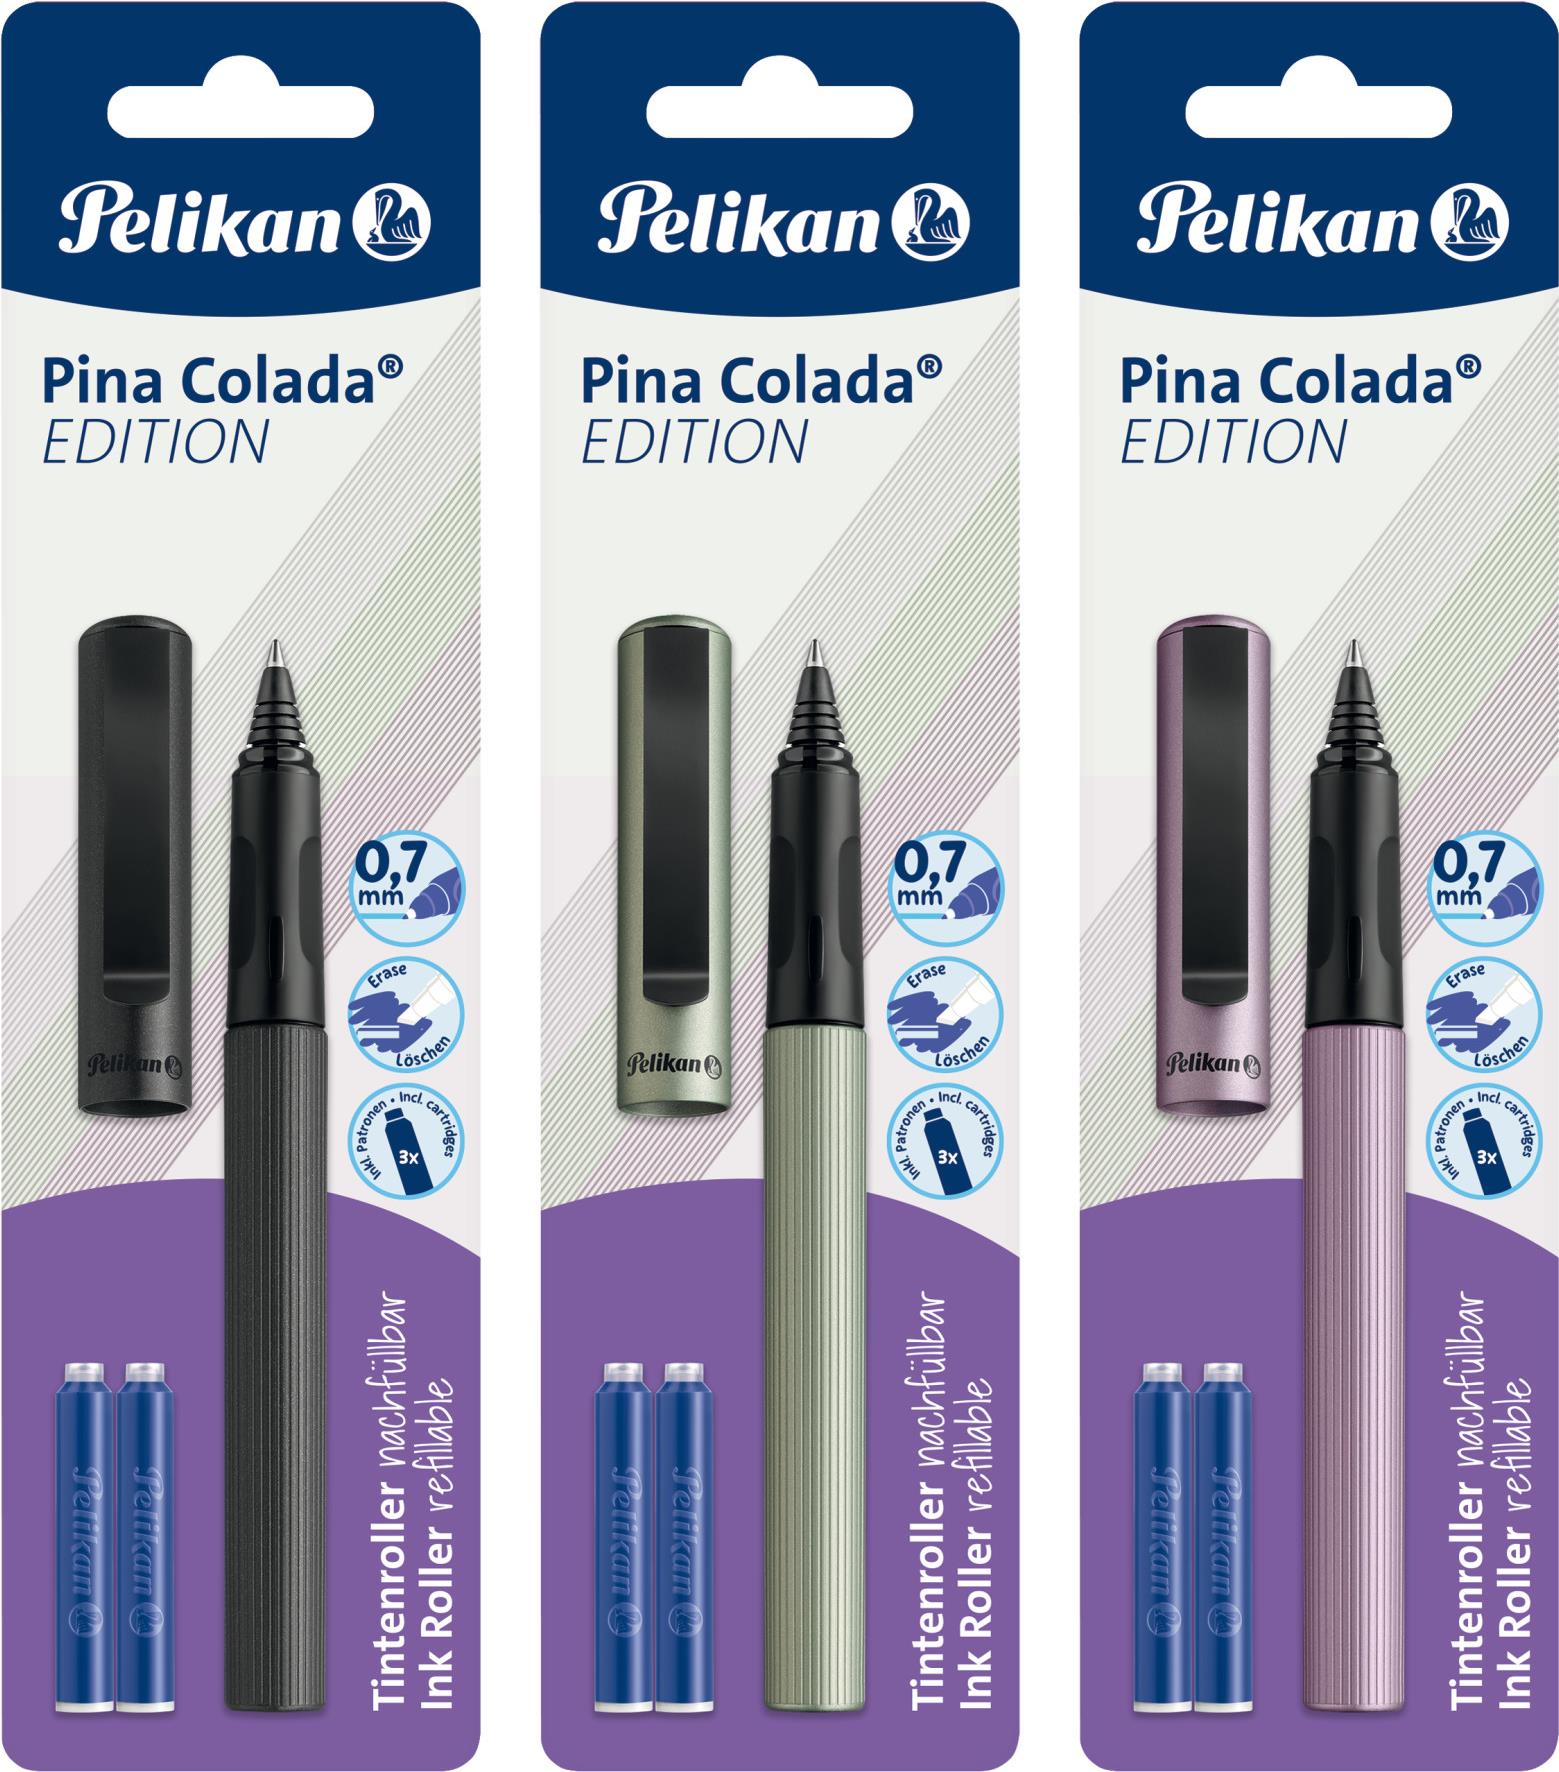 Pelikan Pina Colada Edition. Bauart: Stick Pen, Produktfarbe: Gemischte Farben, Schreibfarben: Blau. Verpackungsart: Sichtverpackung, Menge pro Packung: 1 Stück(e) (824422)